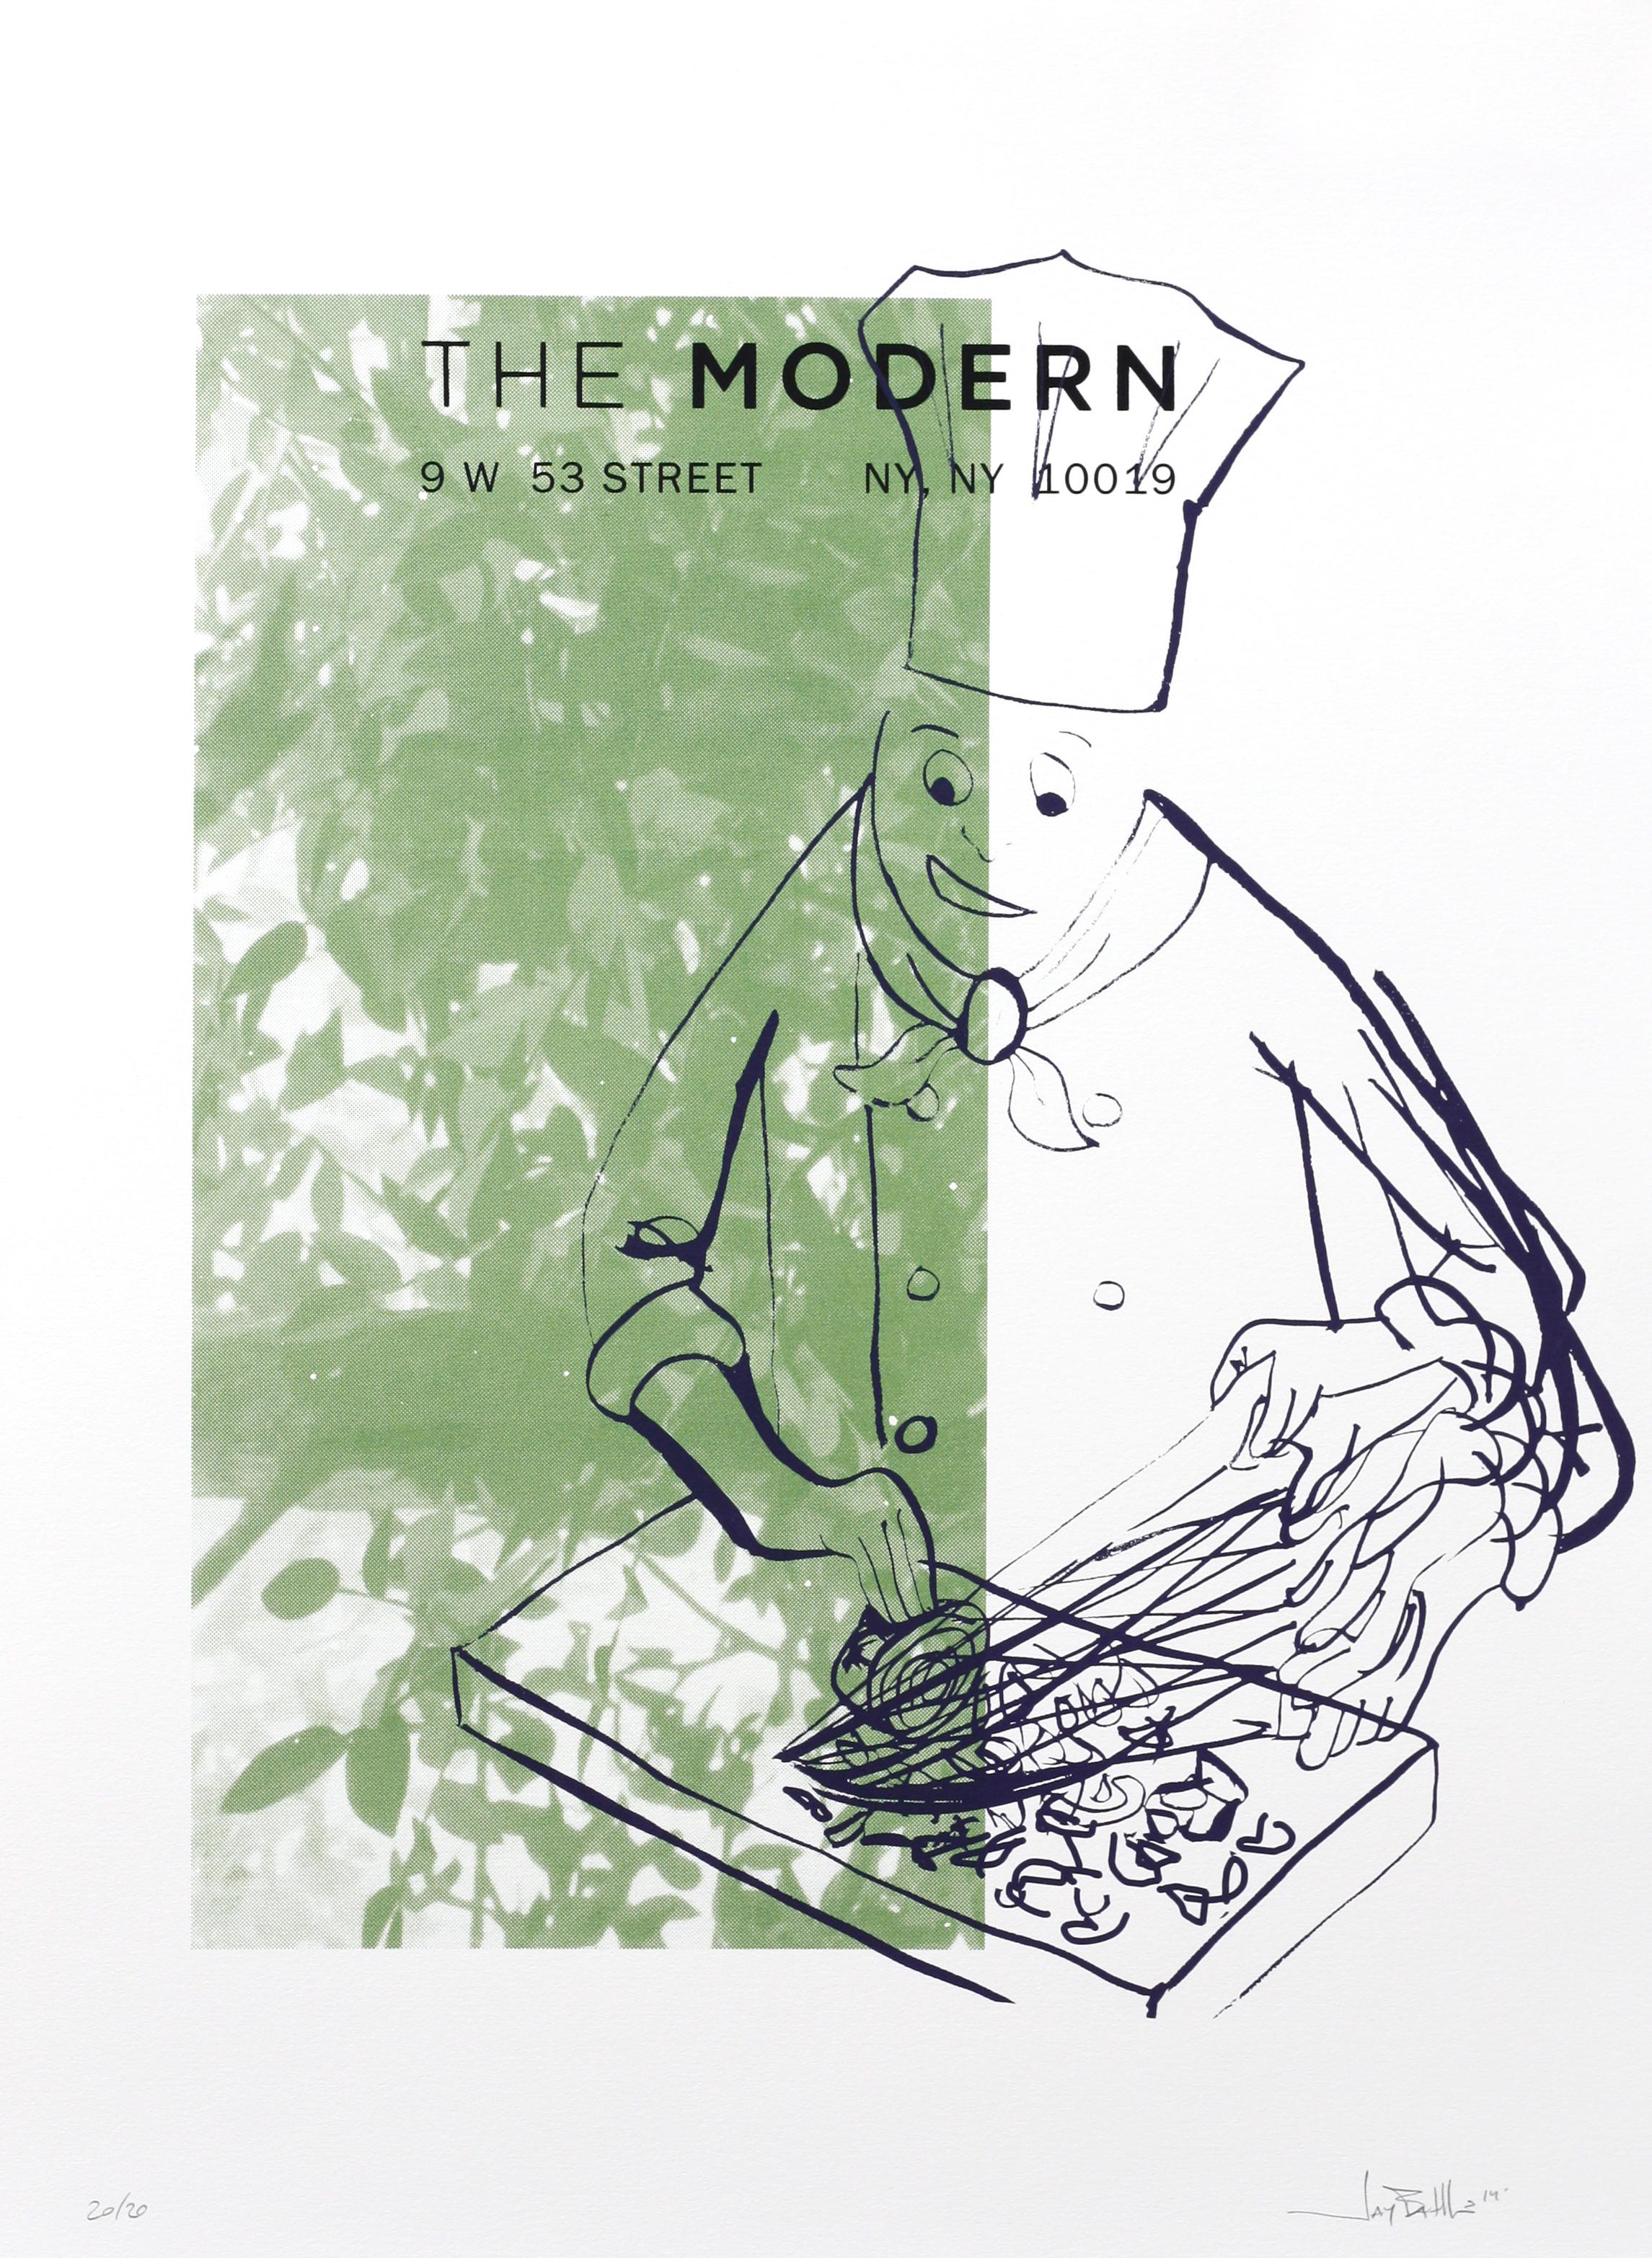 "THE MODERN" - Print by Jay Batlle